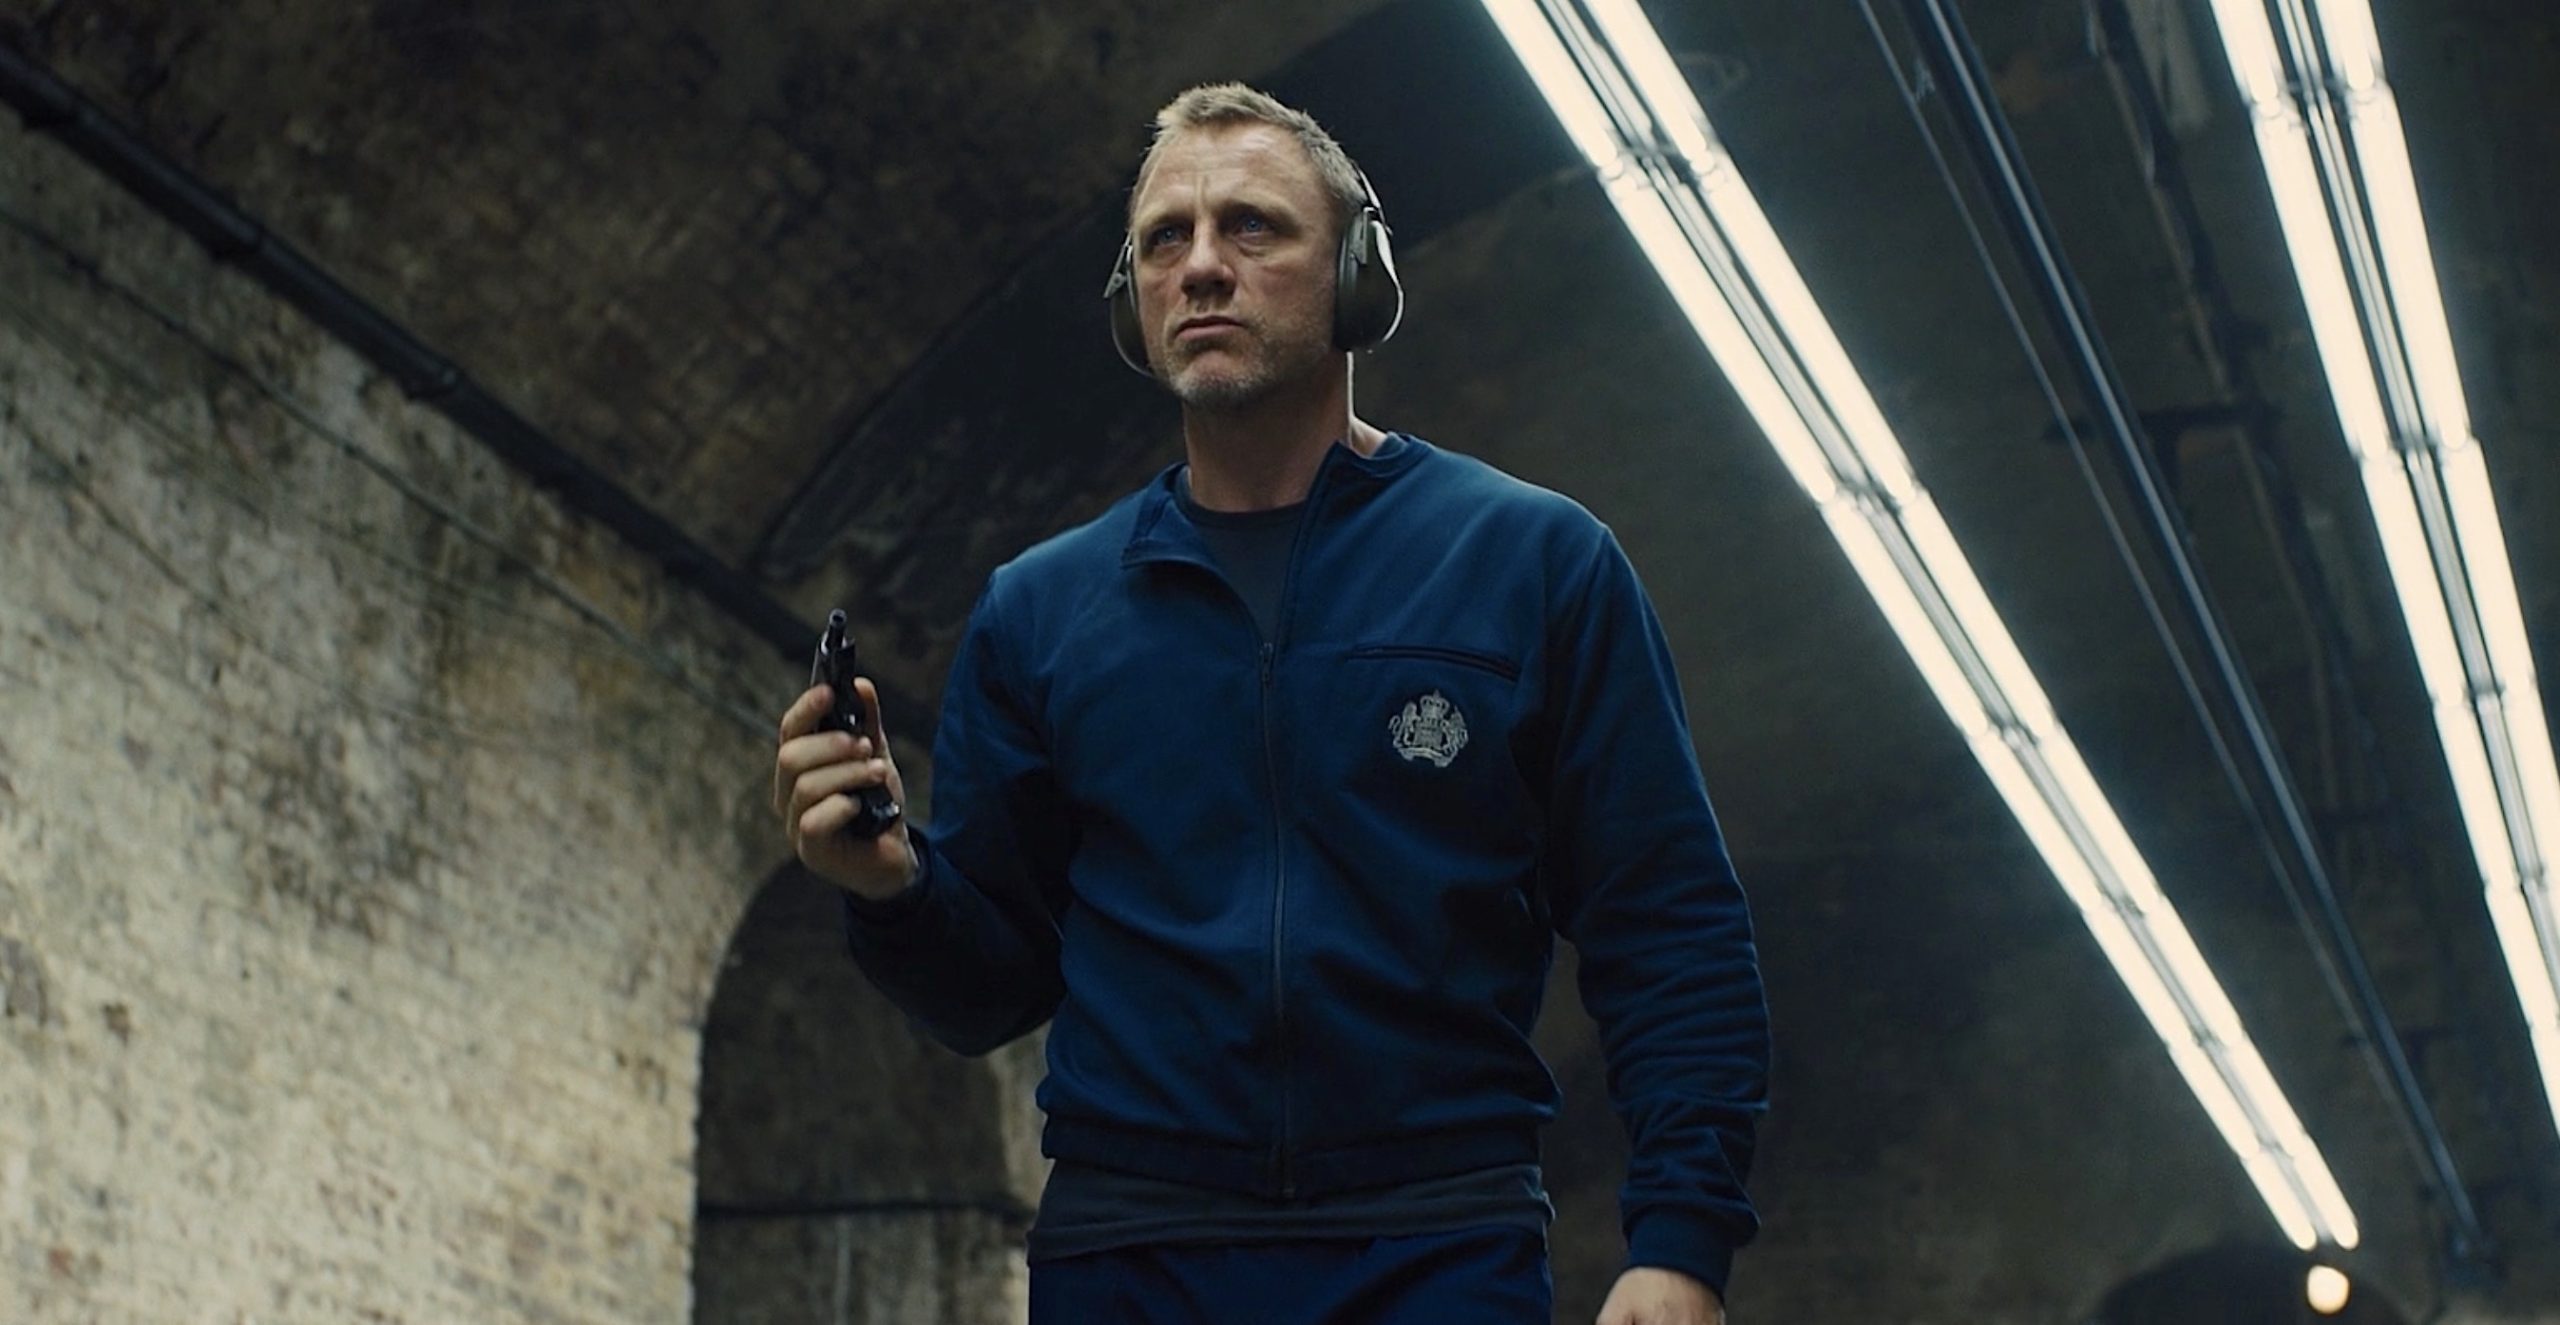 Daniel Craig as James Bond Wearing Blue Training Outfit in SkyFall